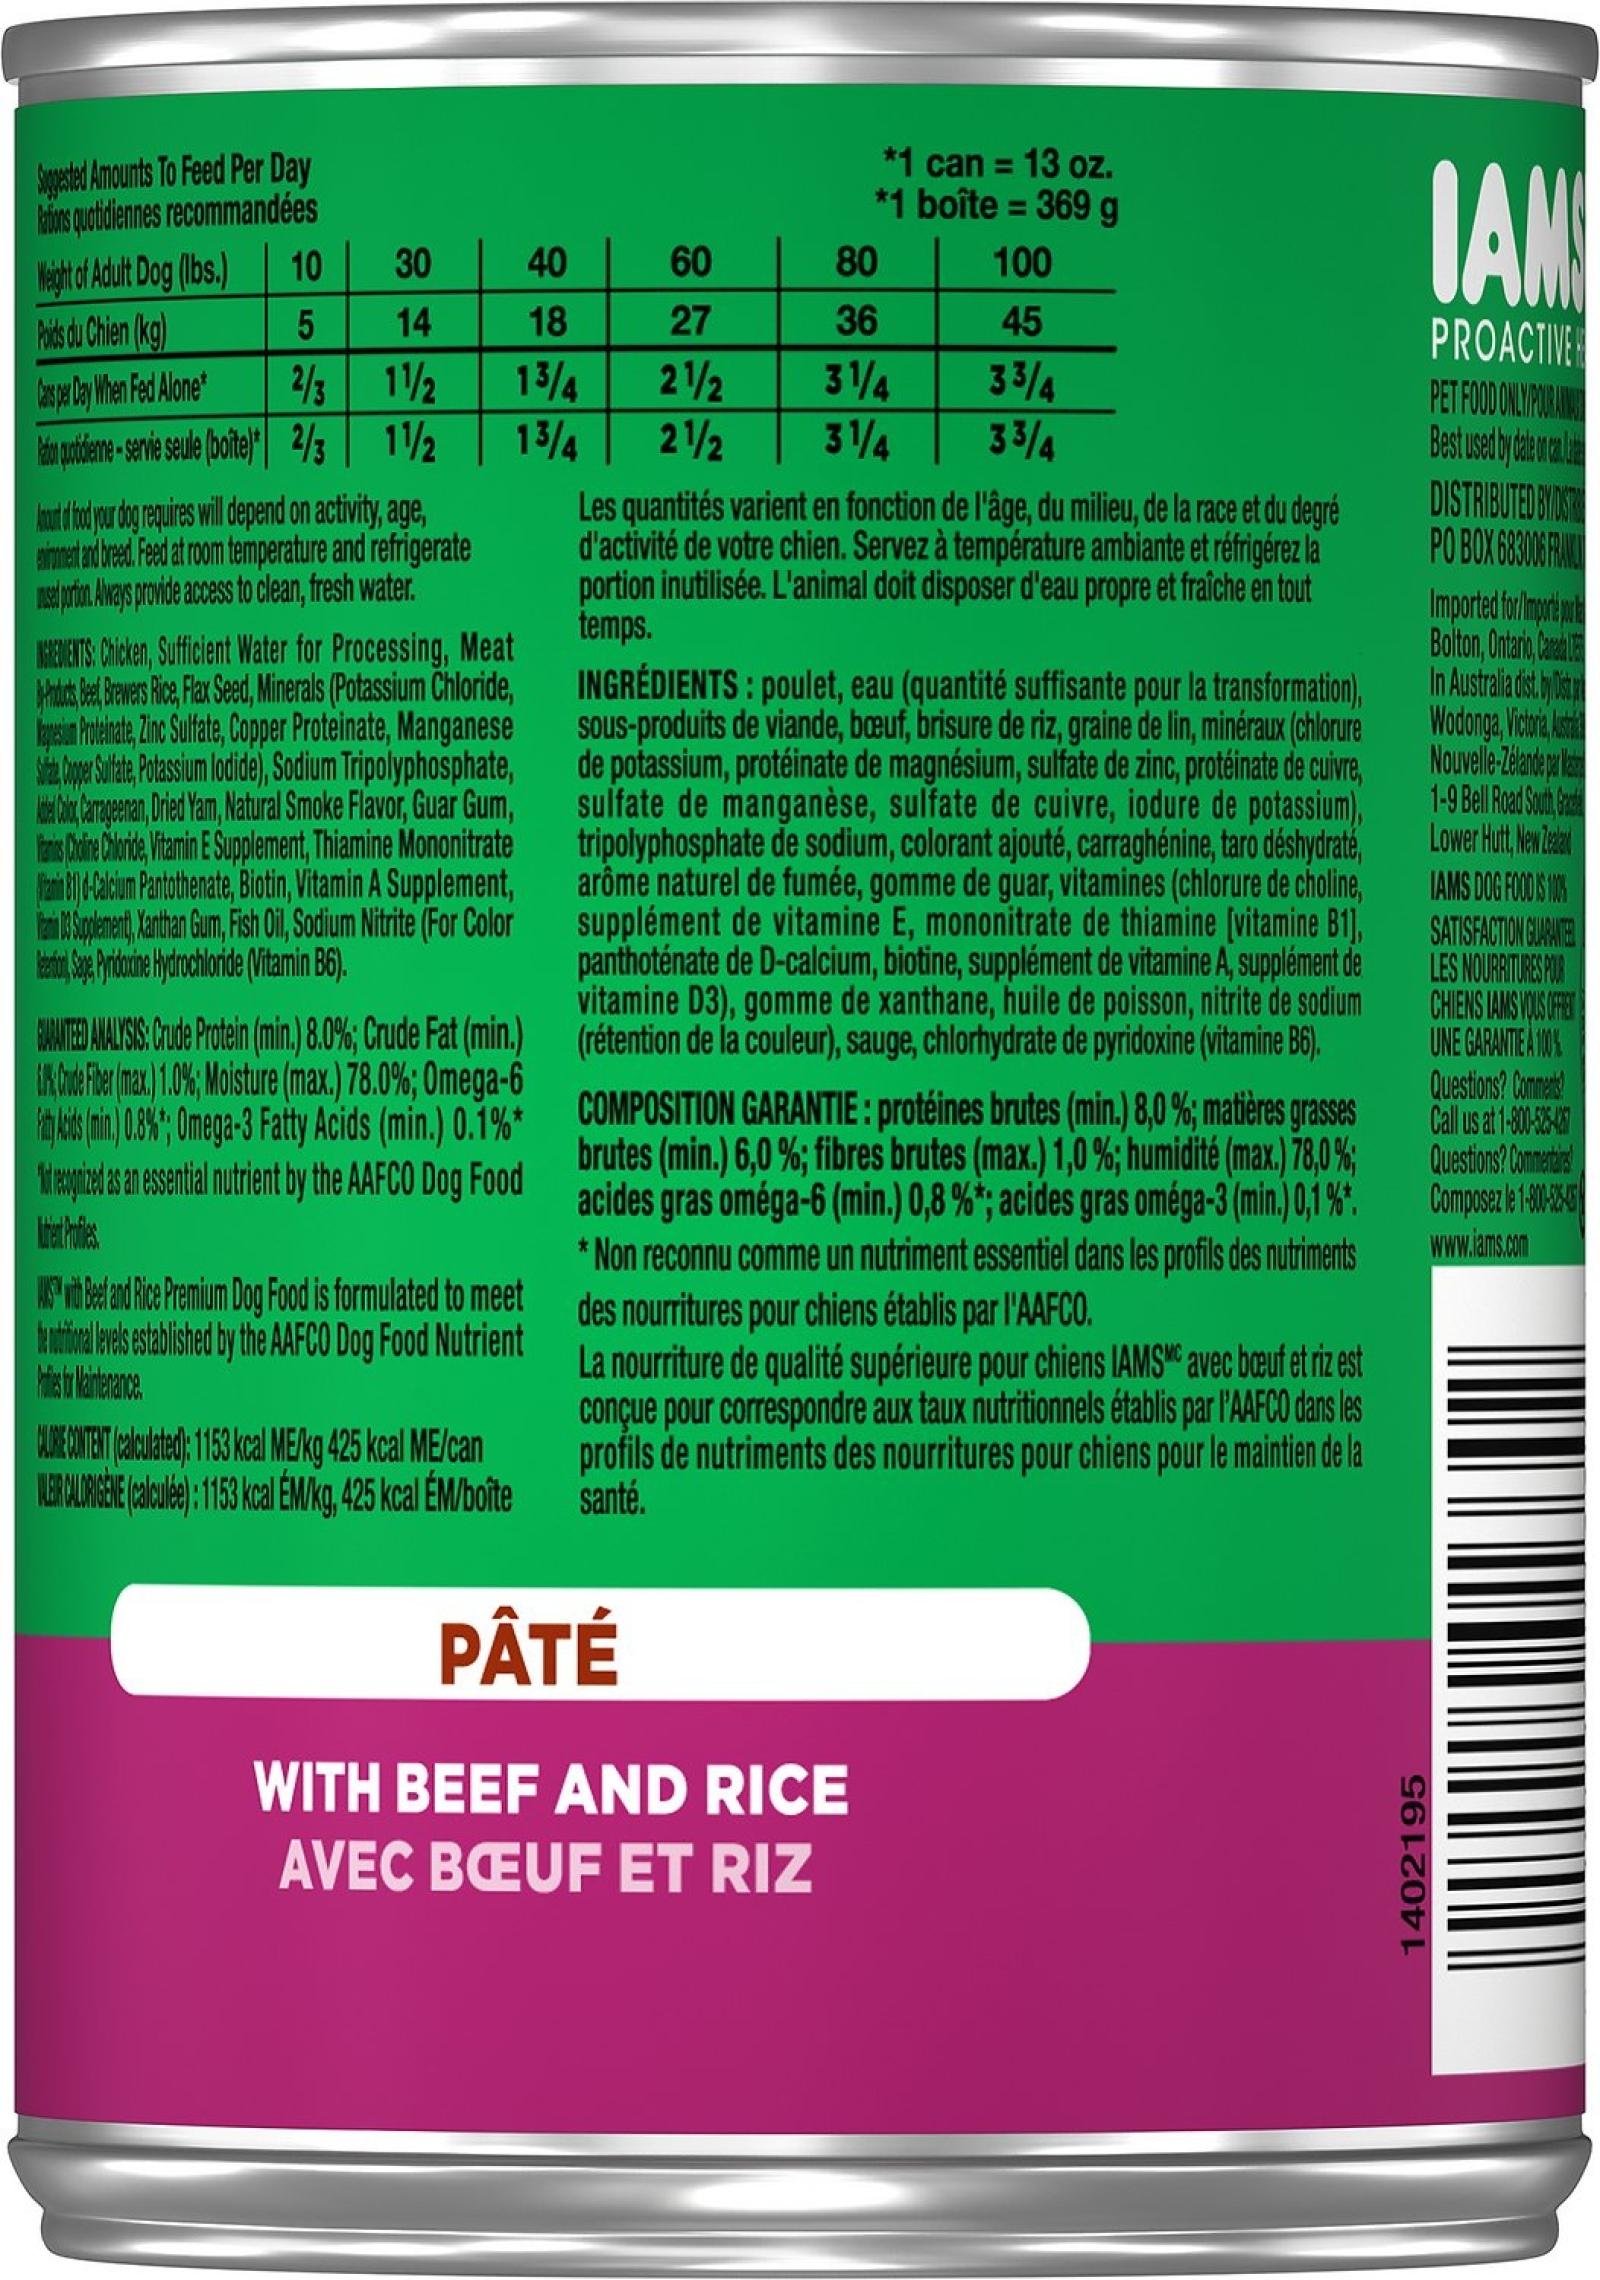 Iams ProActive Health Adult Beef & Rice Pate Canned Dog Food